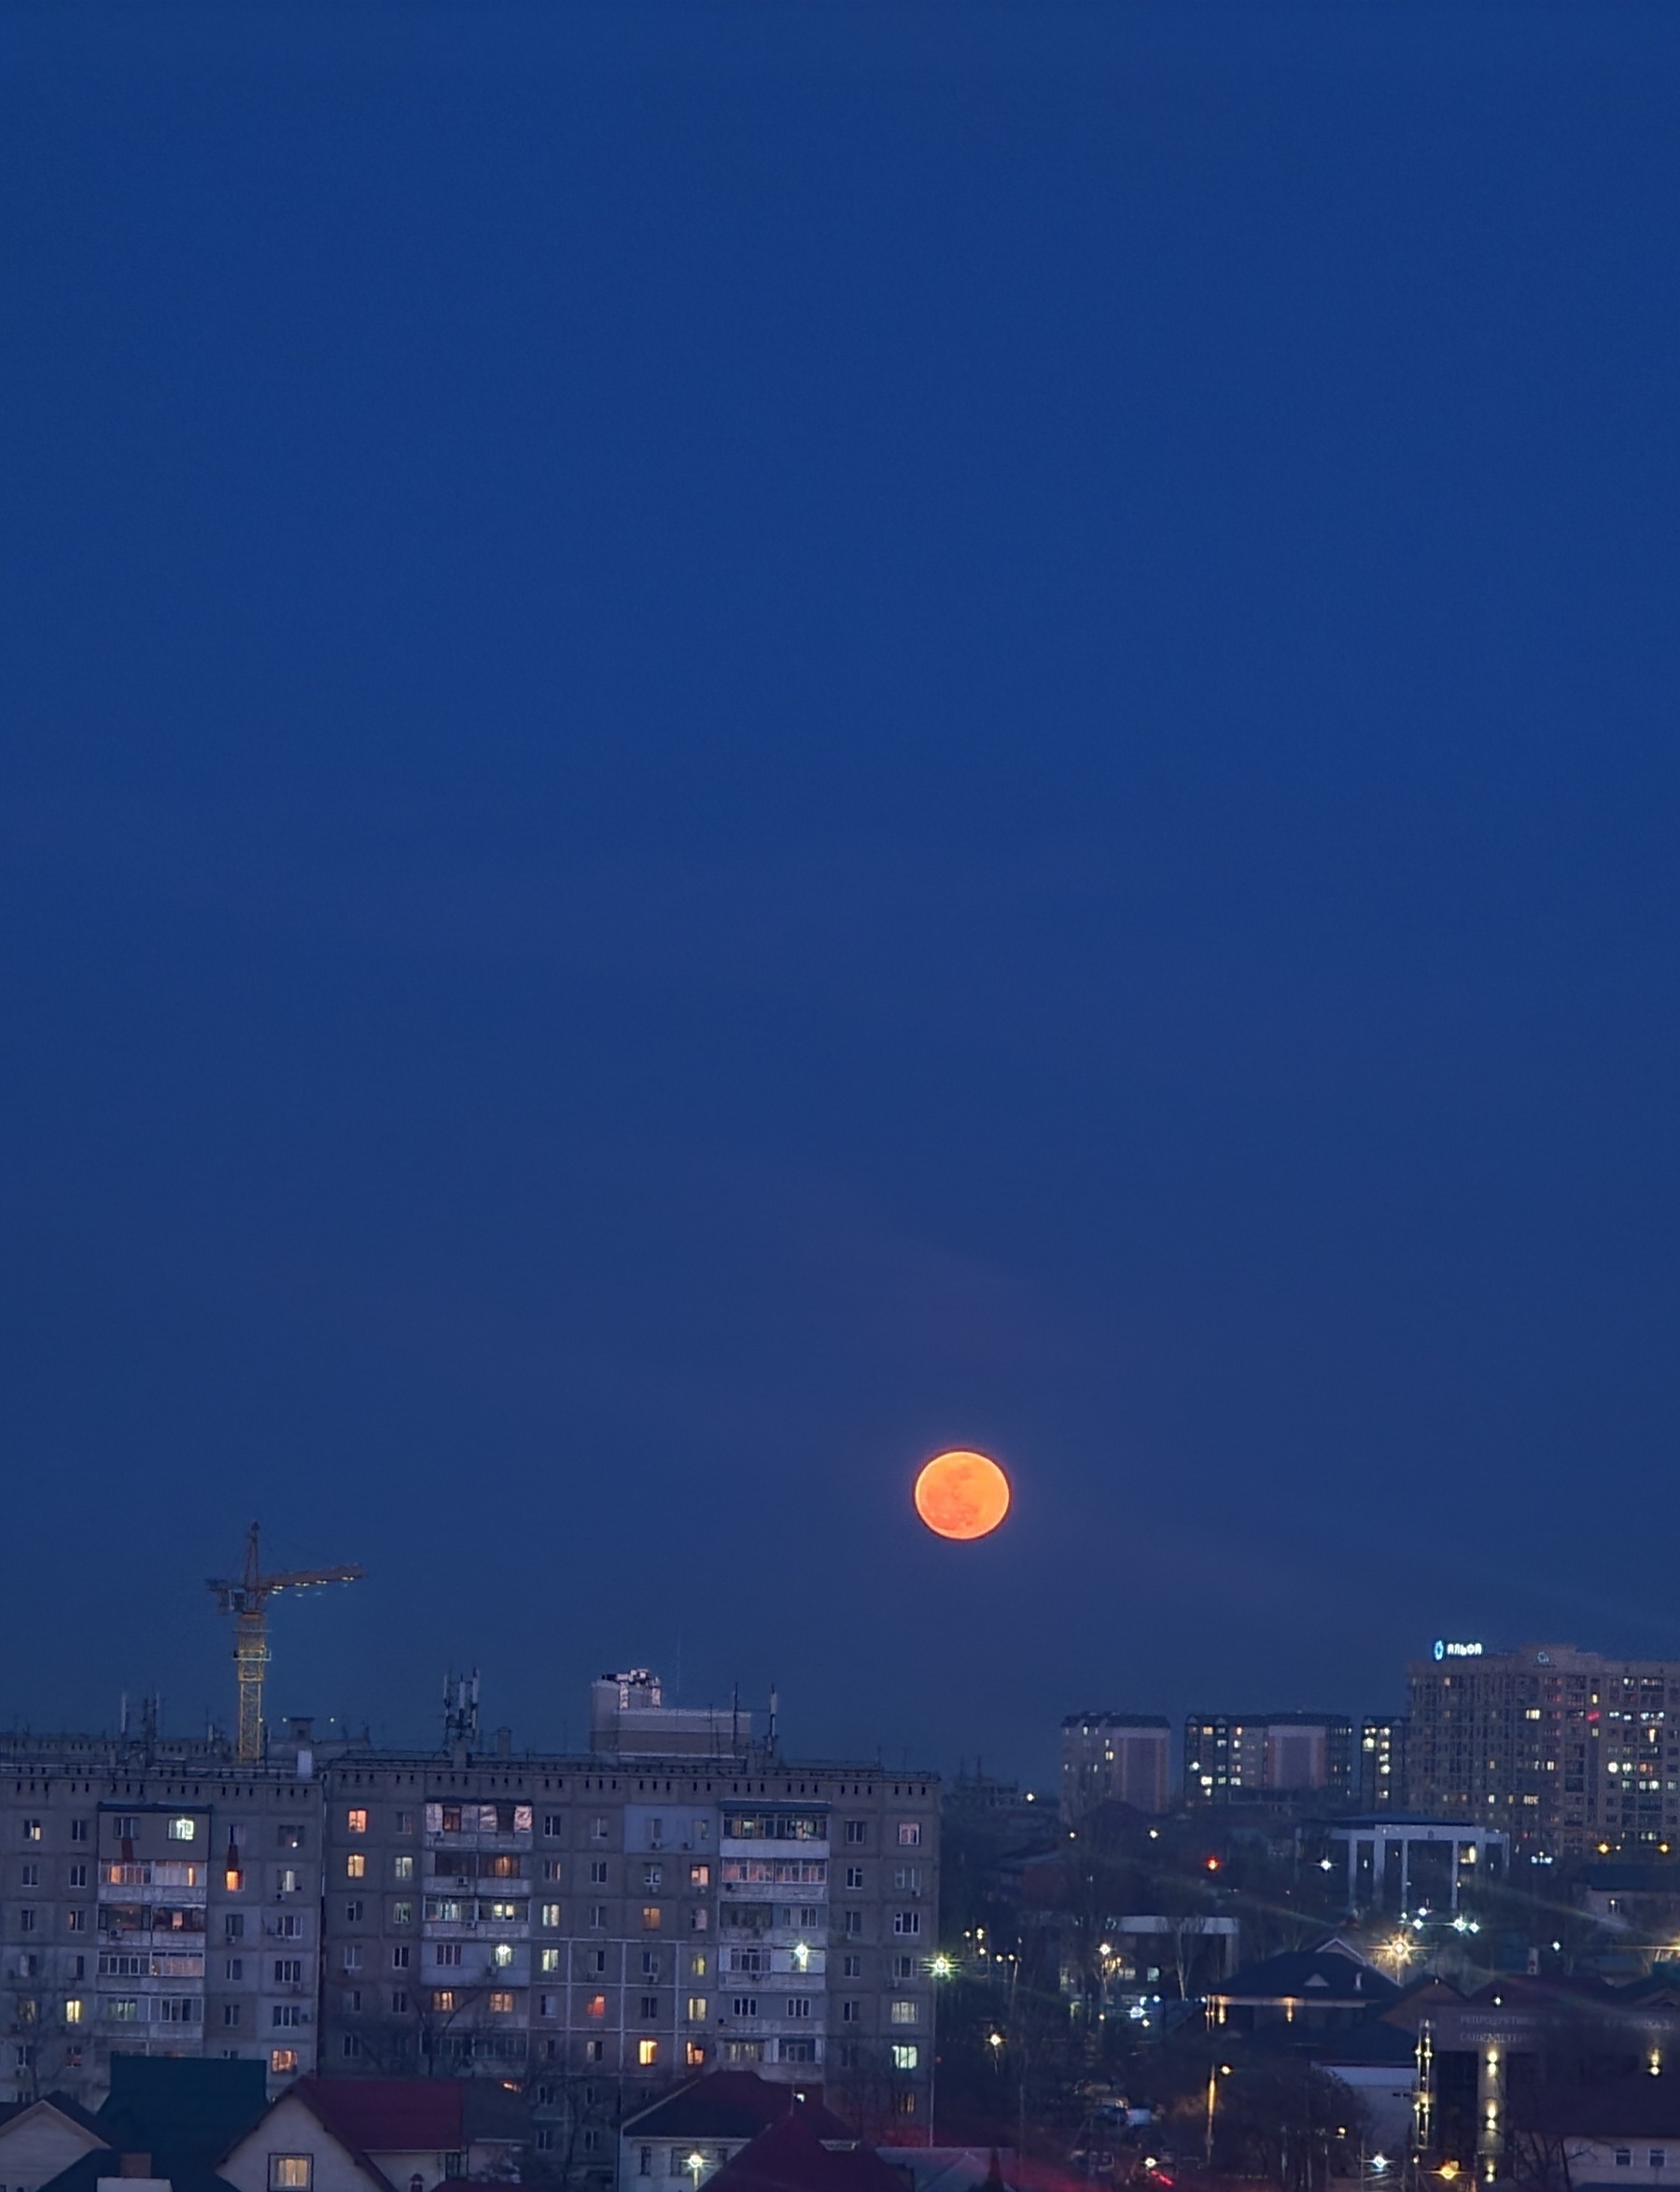 orange moon in a dark blue sky over buildings